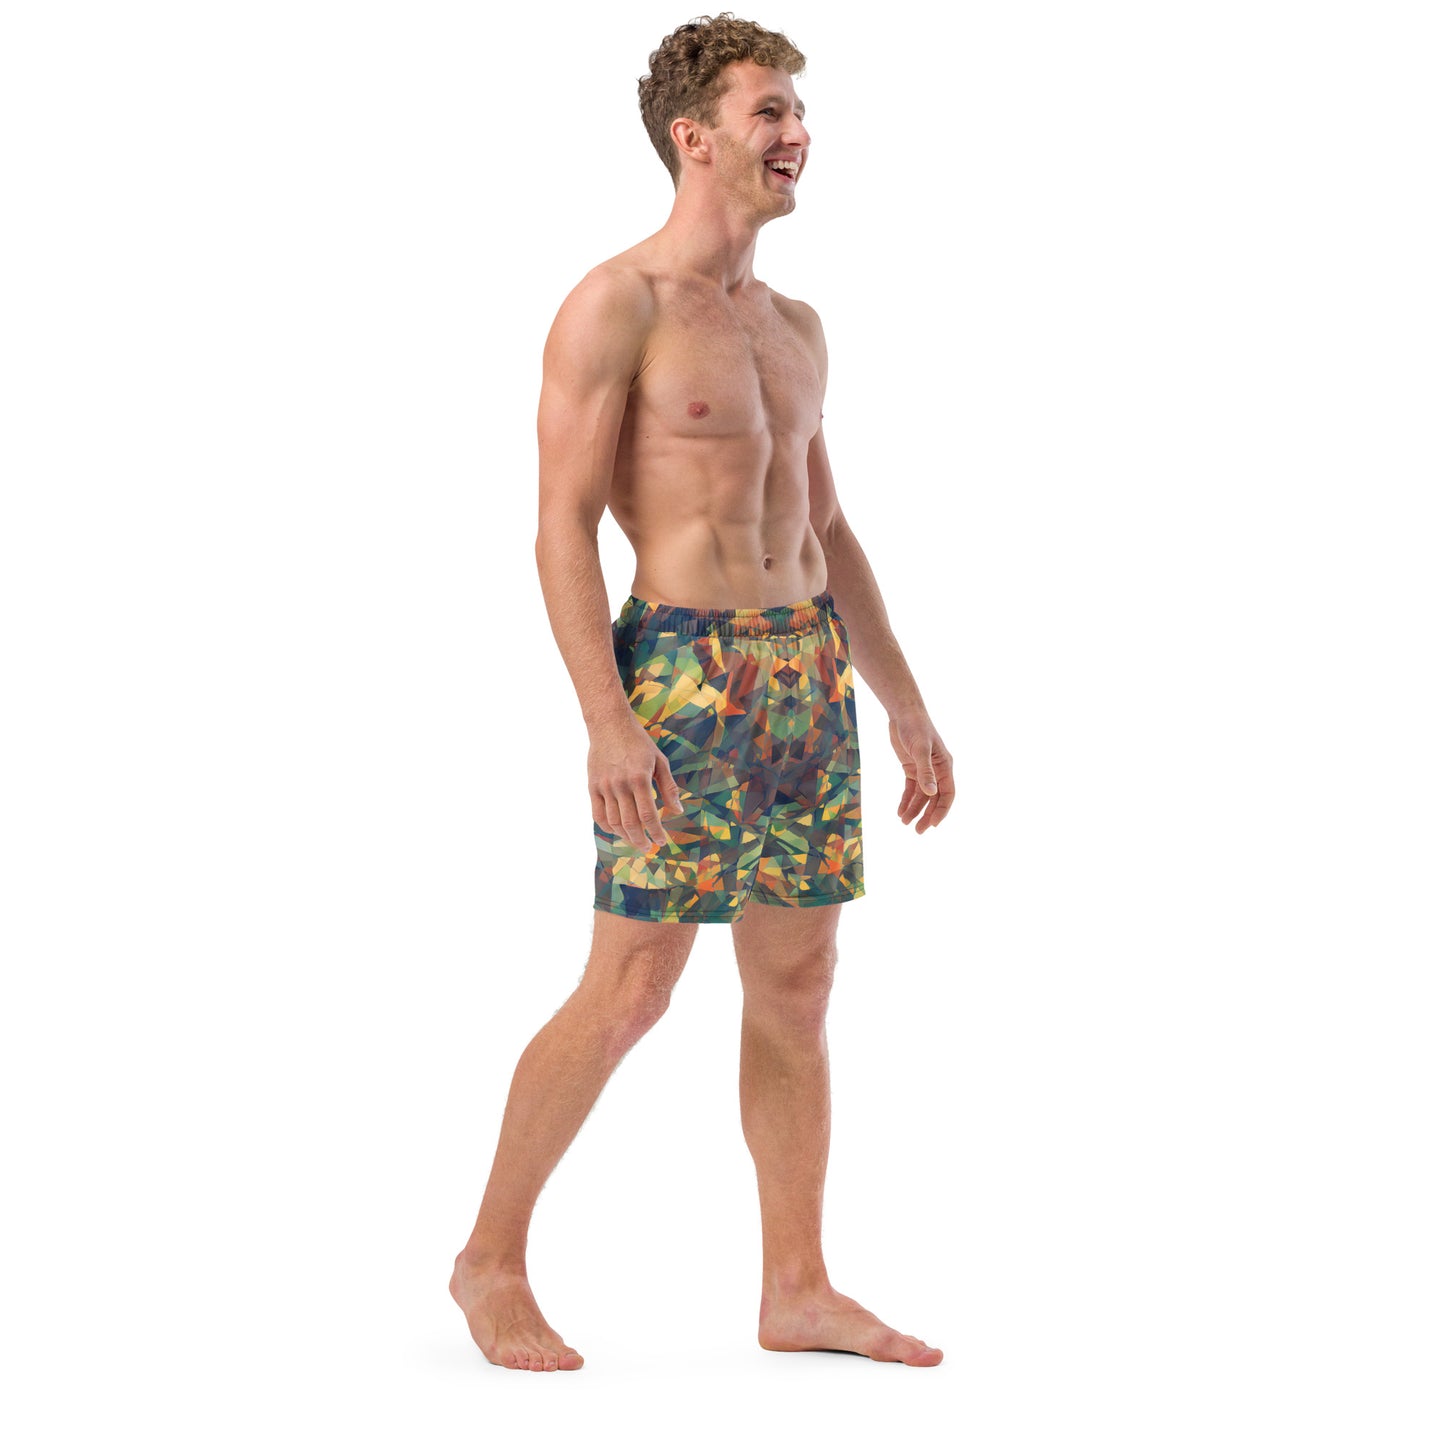 Jagged Confusion : Men's swim trunks